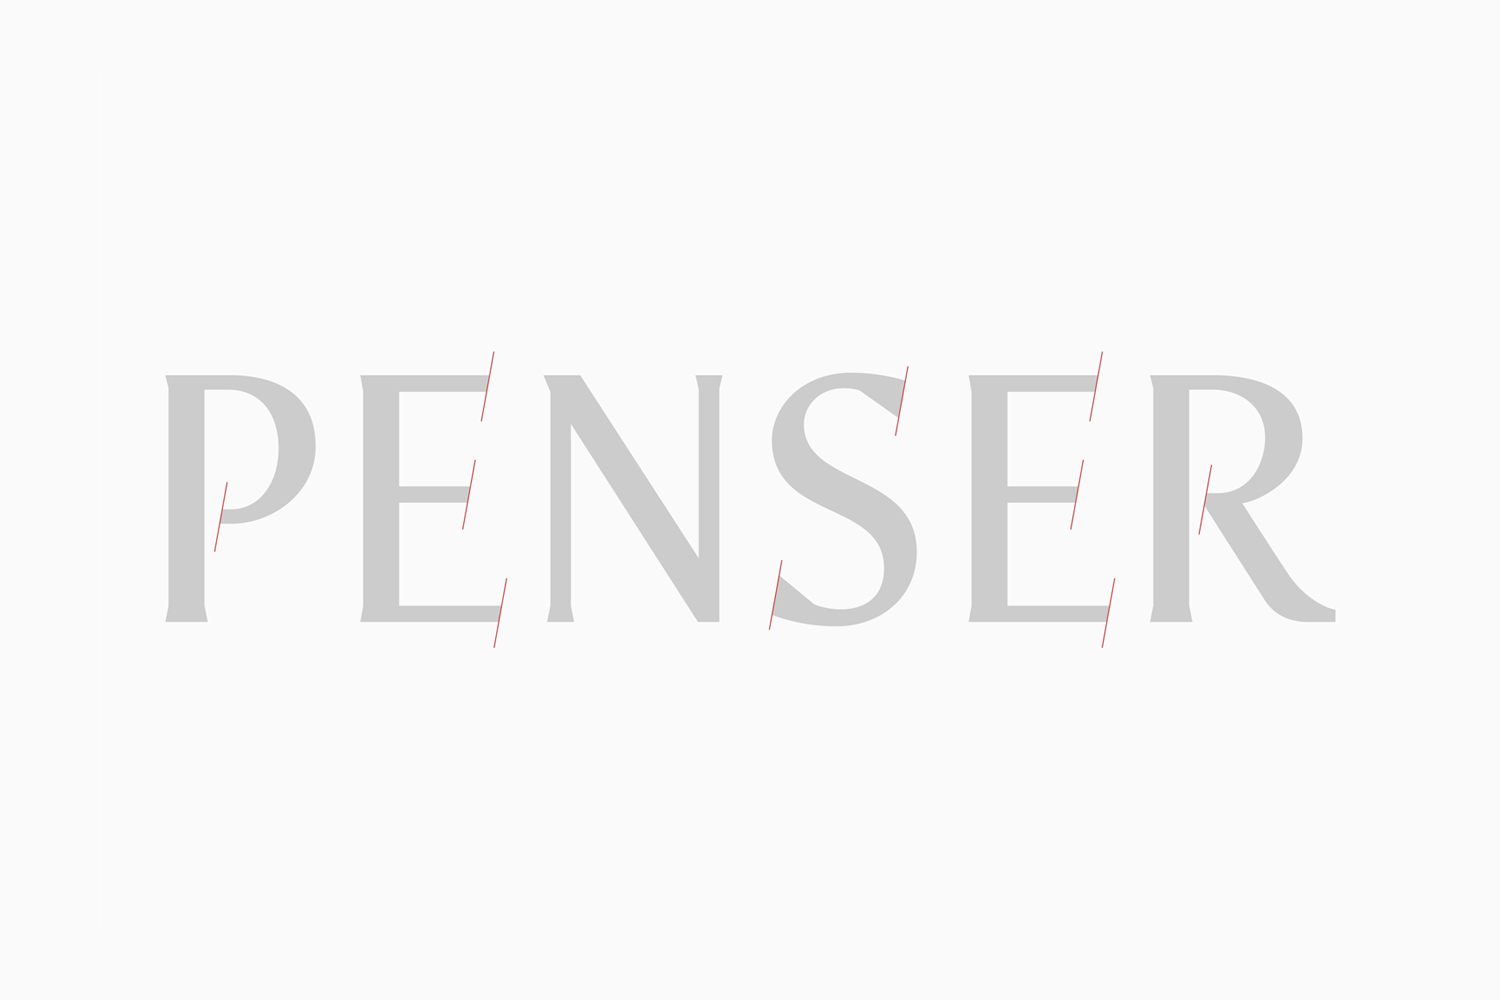 Logotype for Sweden's leading private banking firm Erik Penser Bank designed by Bedow and Íñigo López Vázquez